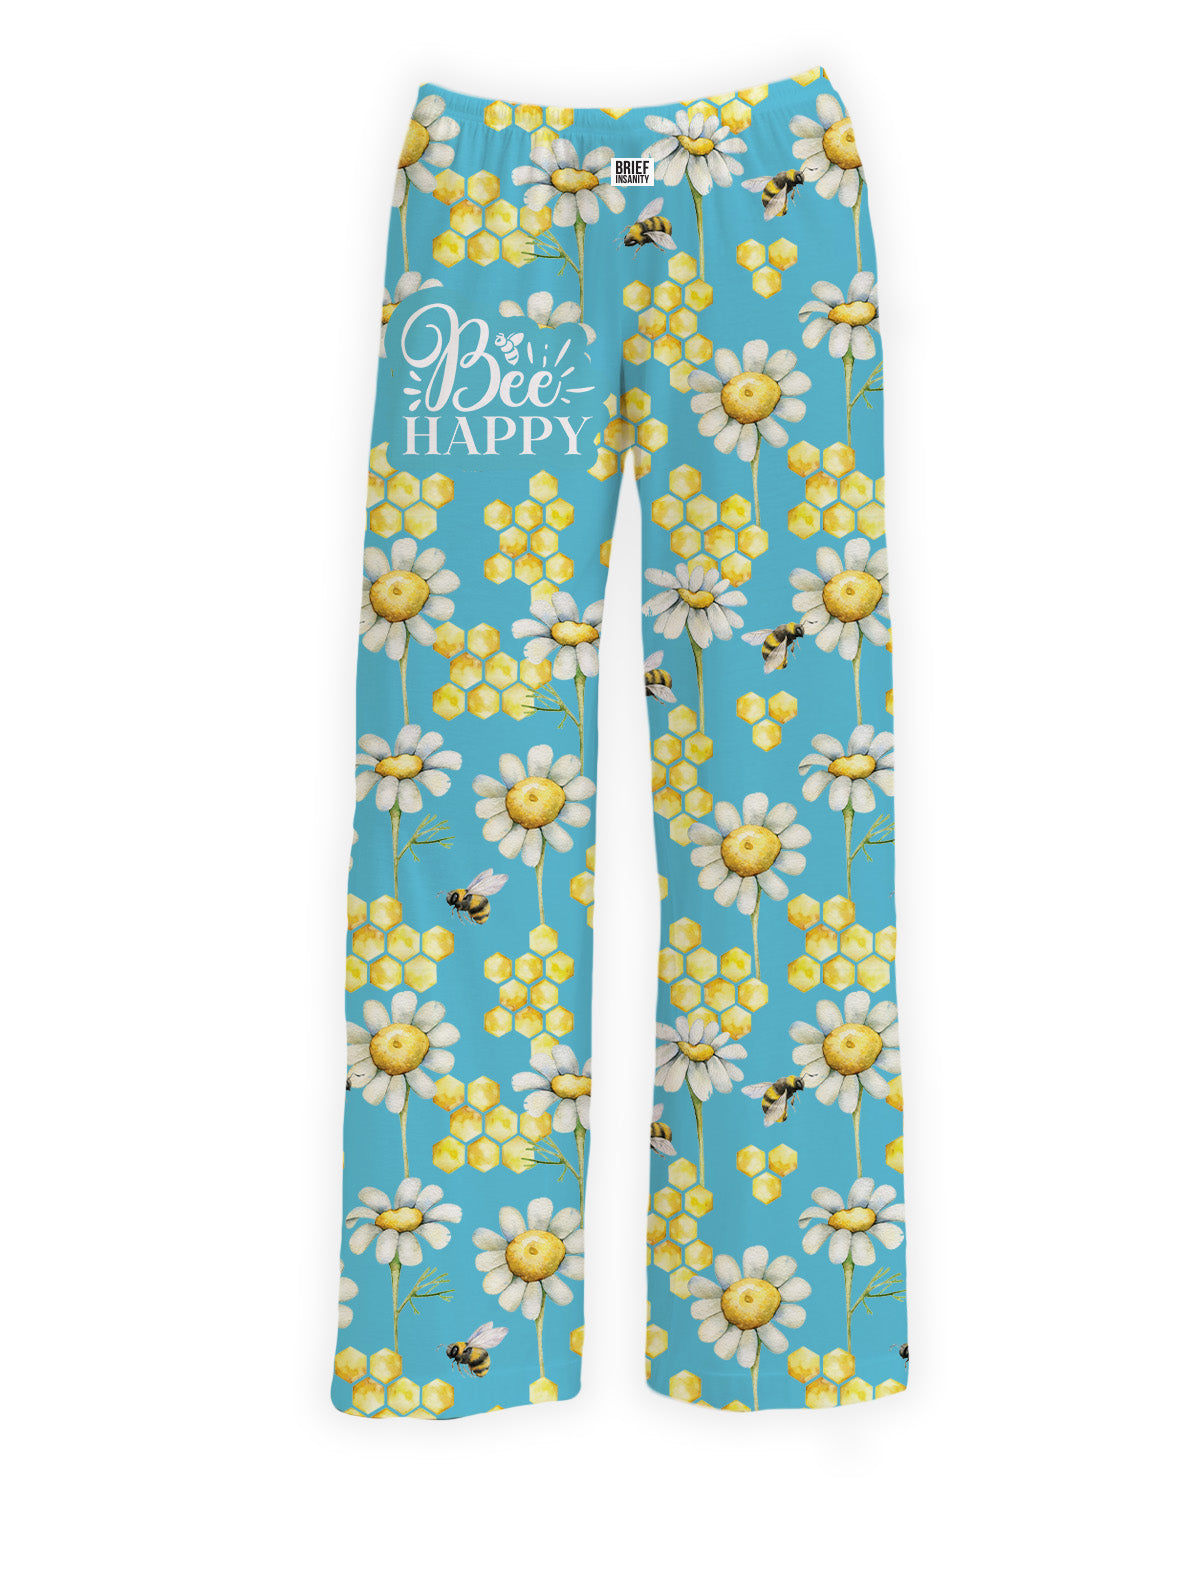 BRIEF INSANITY's Bee Happy Pajama Lounge Pants